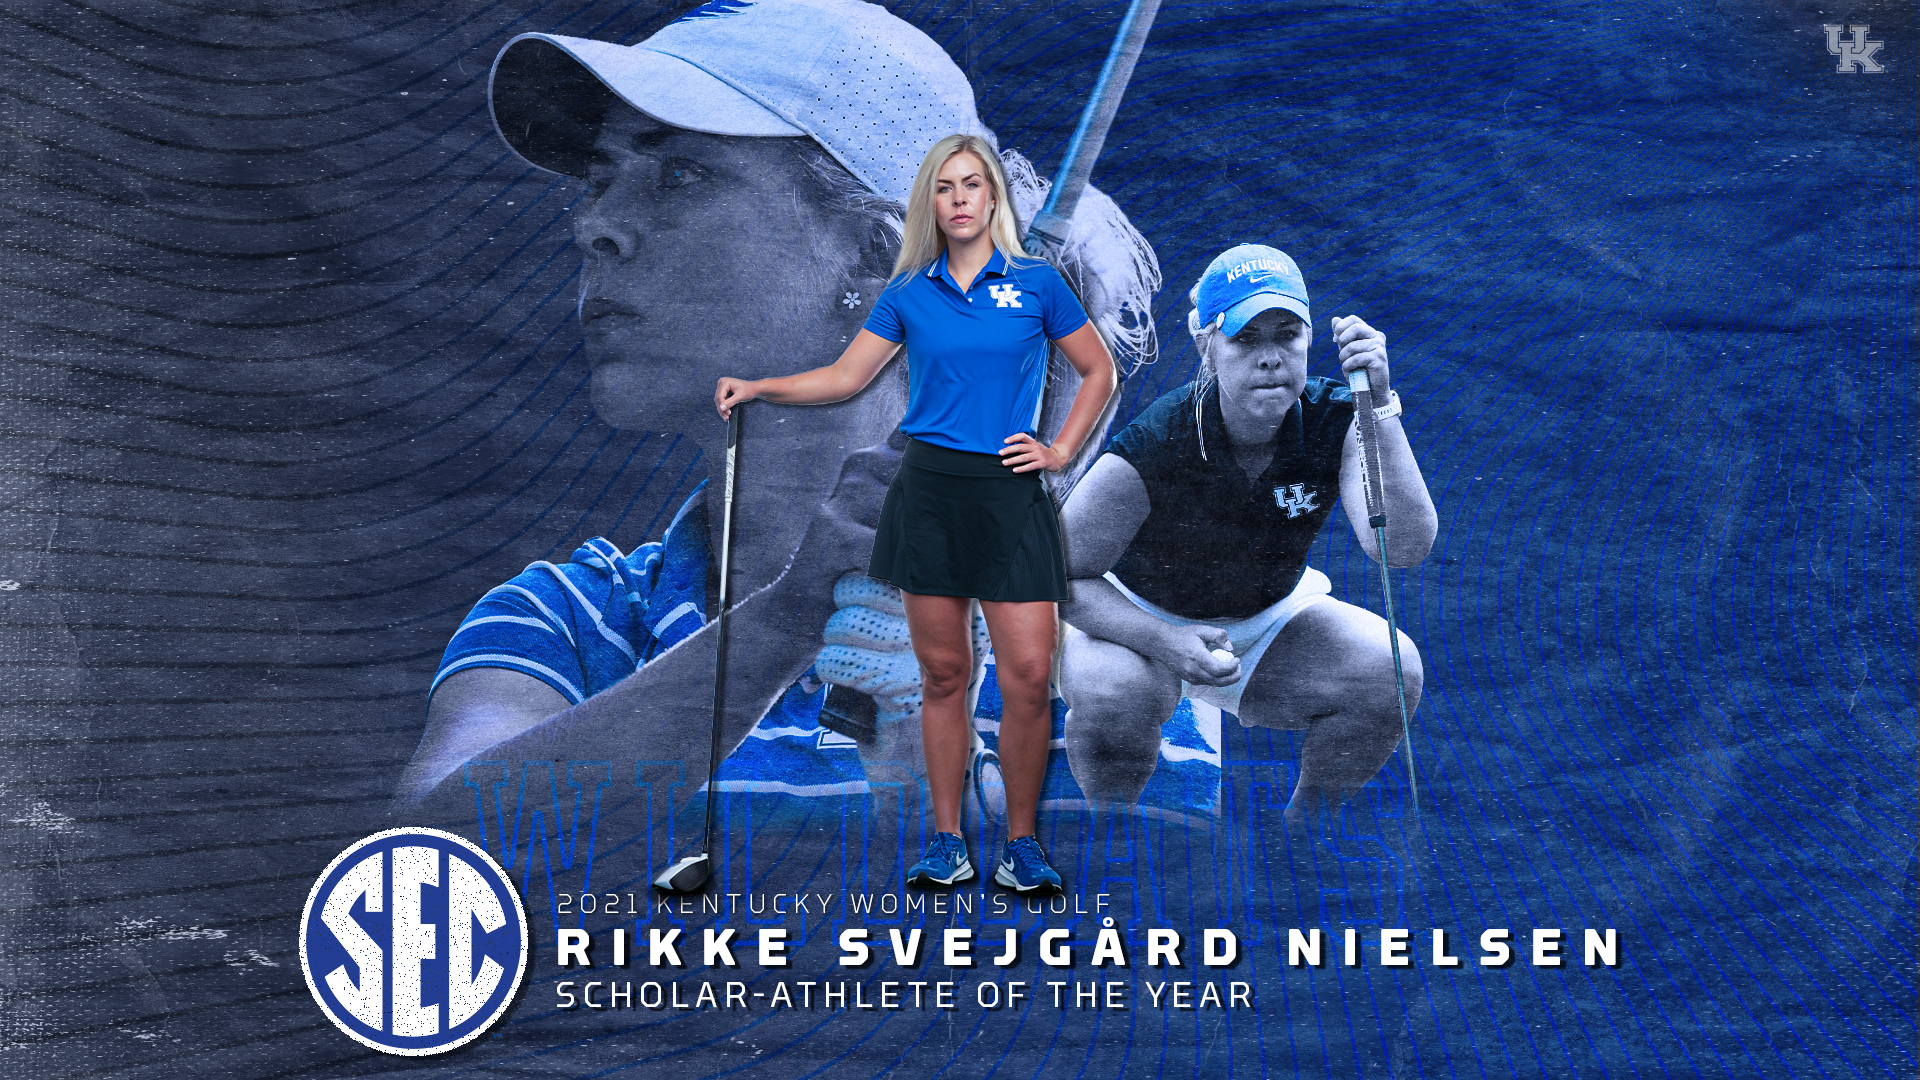 Svejgård Nielsen Wins SEC Women’s Golf Scholar-Athlete of the Year